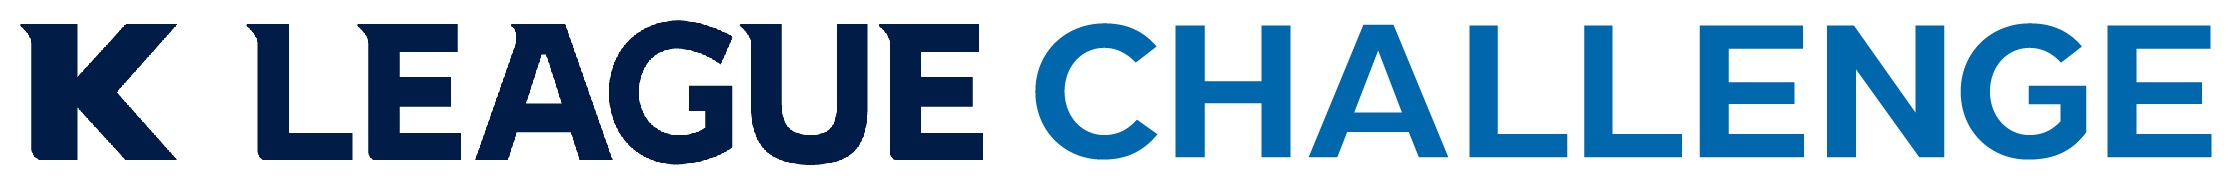 K LEAGUE CHALLENGE-  Logotype.jpg